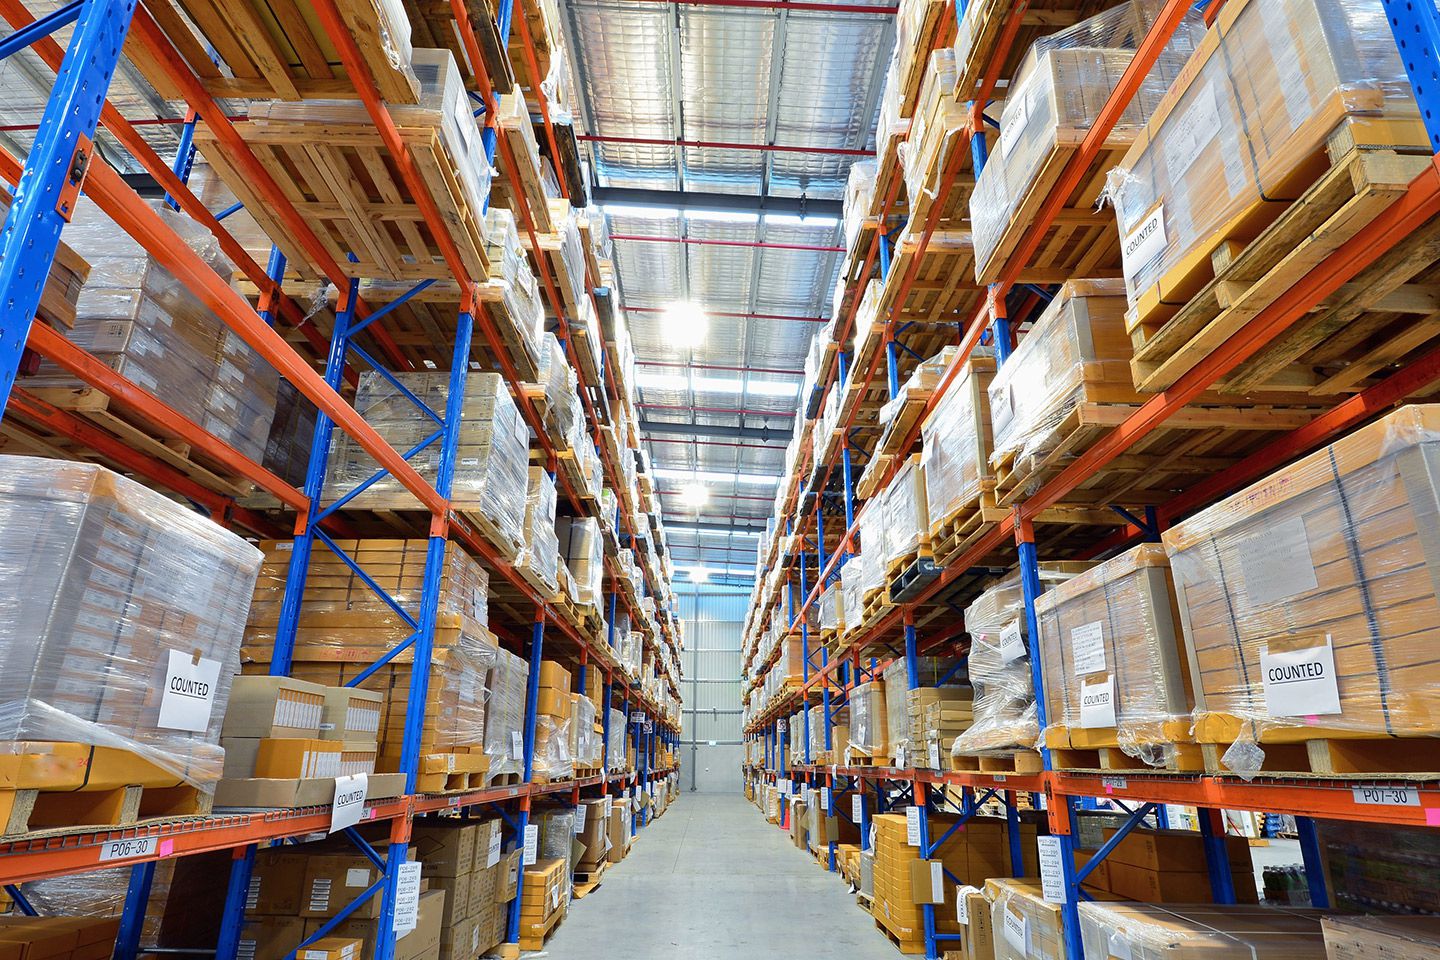 Pallet rack shelving: Benefits of having a well-organized storage facility  - AZ Big Media